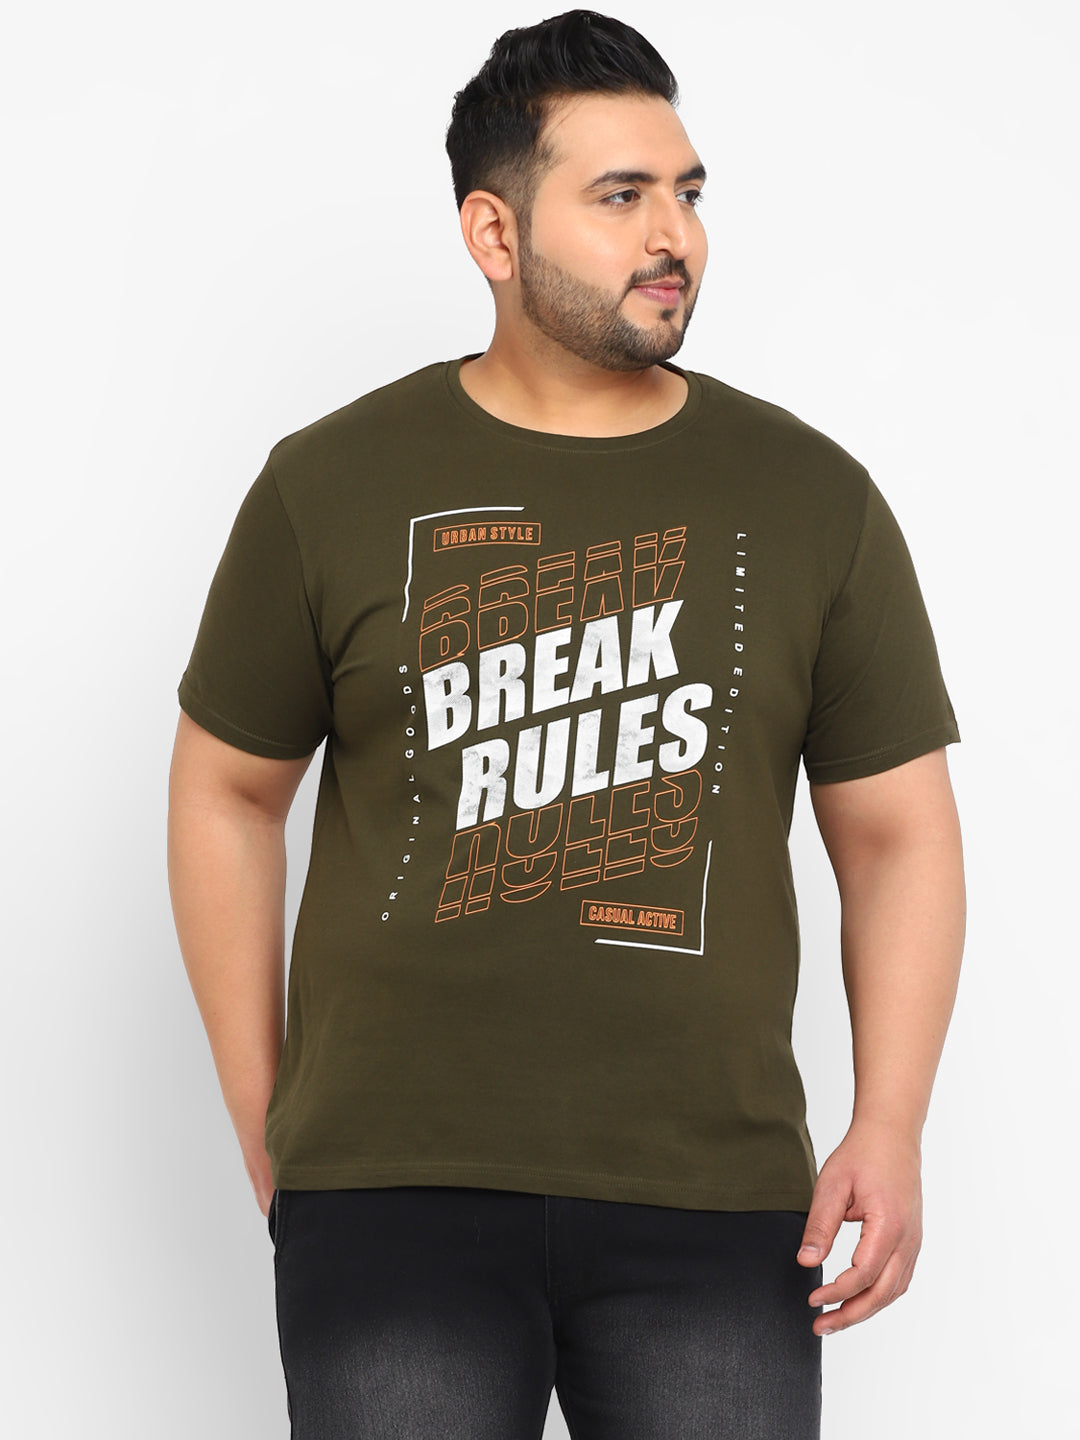 Plus Men's Green Graphic Printed Half Sleeve Regular Fit Cotton T-Shirt